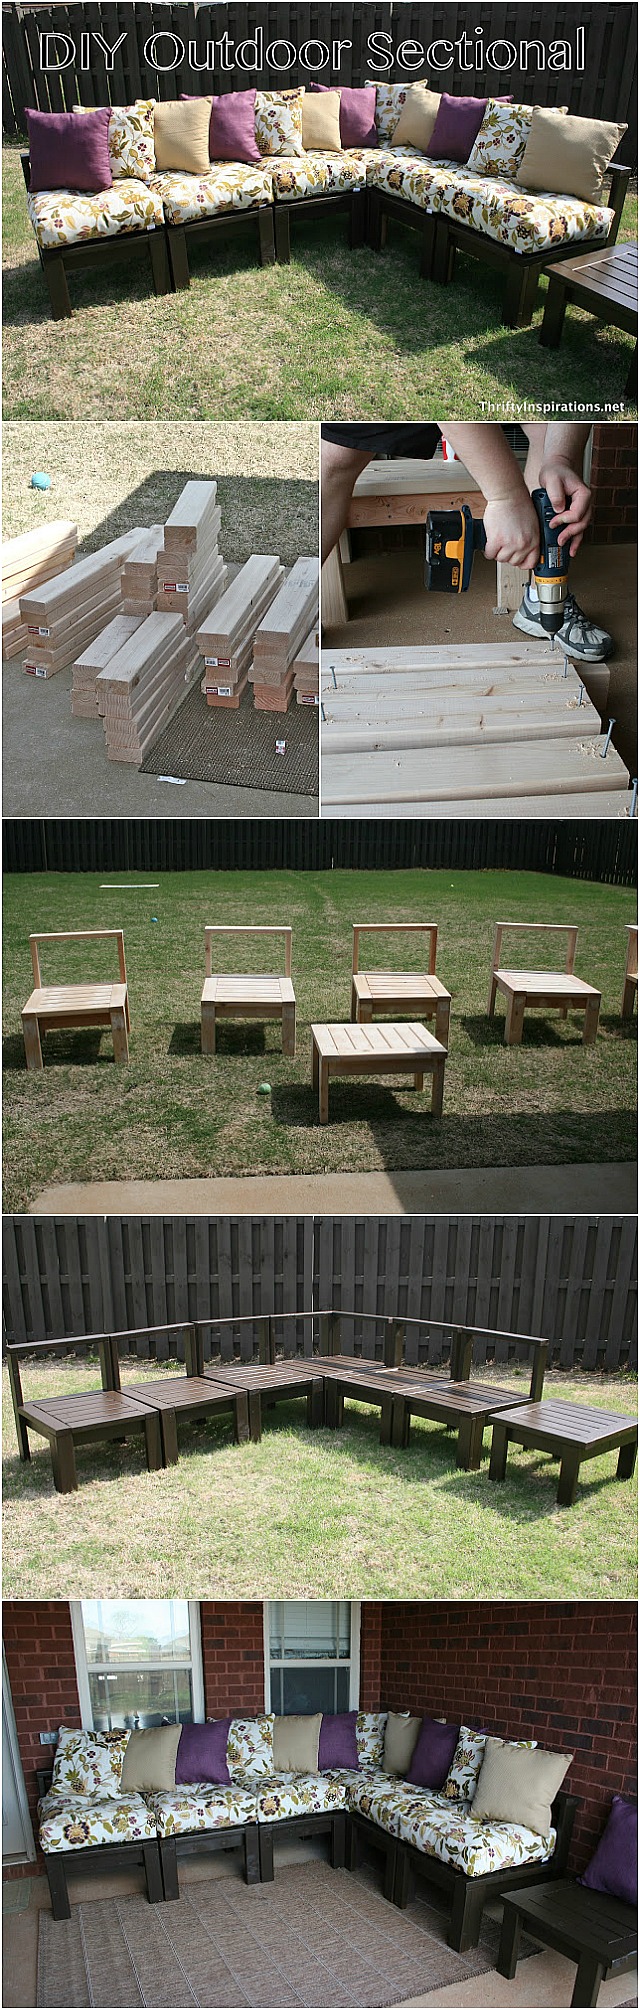 DIY Outdoor Sectional Instructions - DIY Backyard Furniture. Outdoor decor.